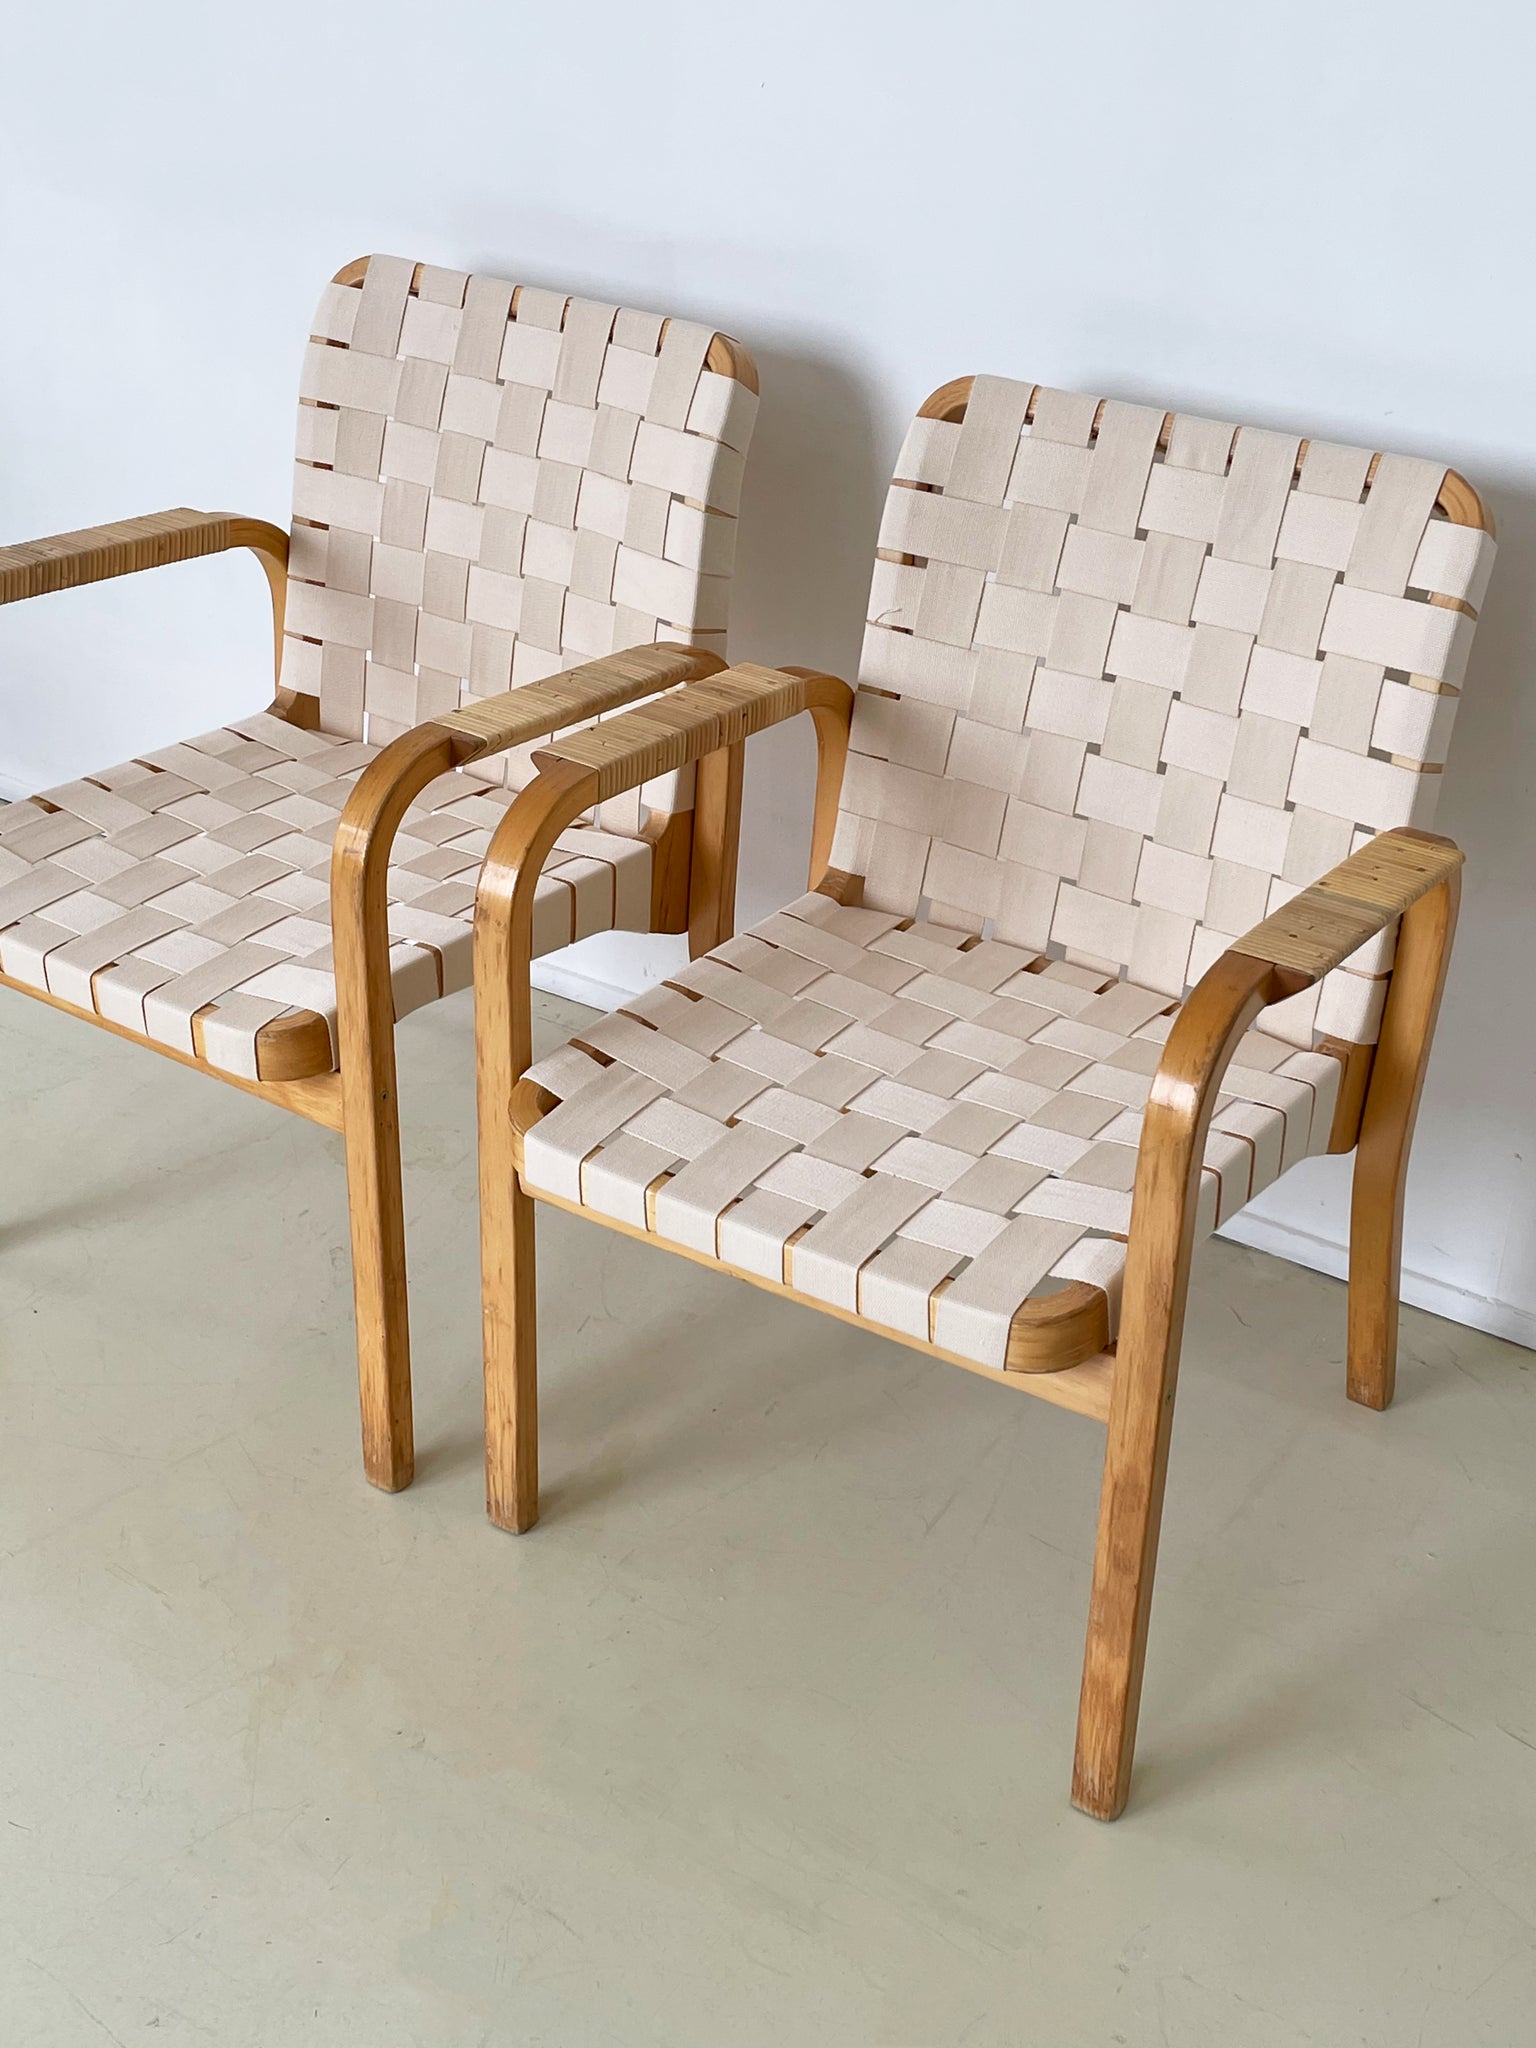 1960s Alvar Aalto Chair 45 With Rattan Arms